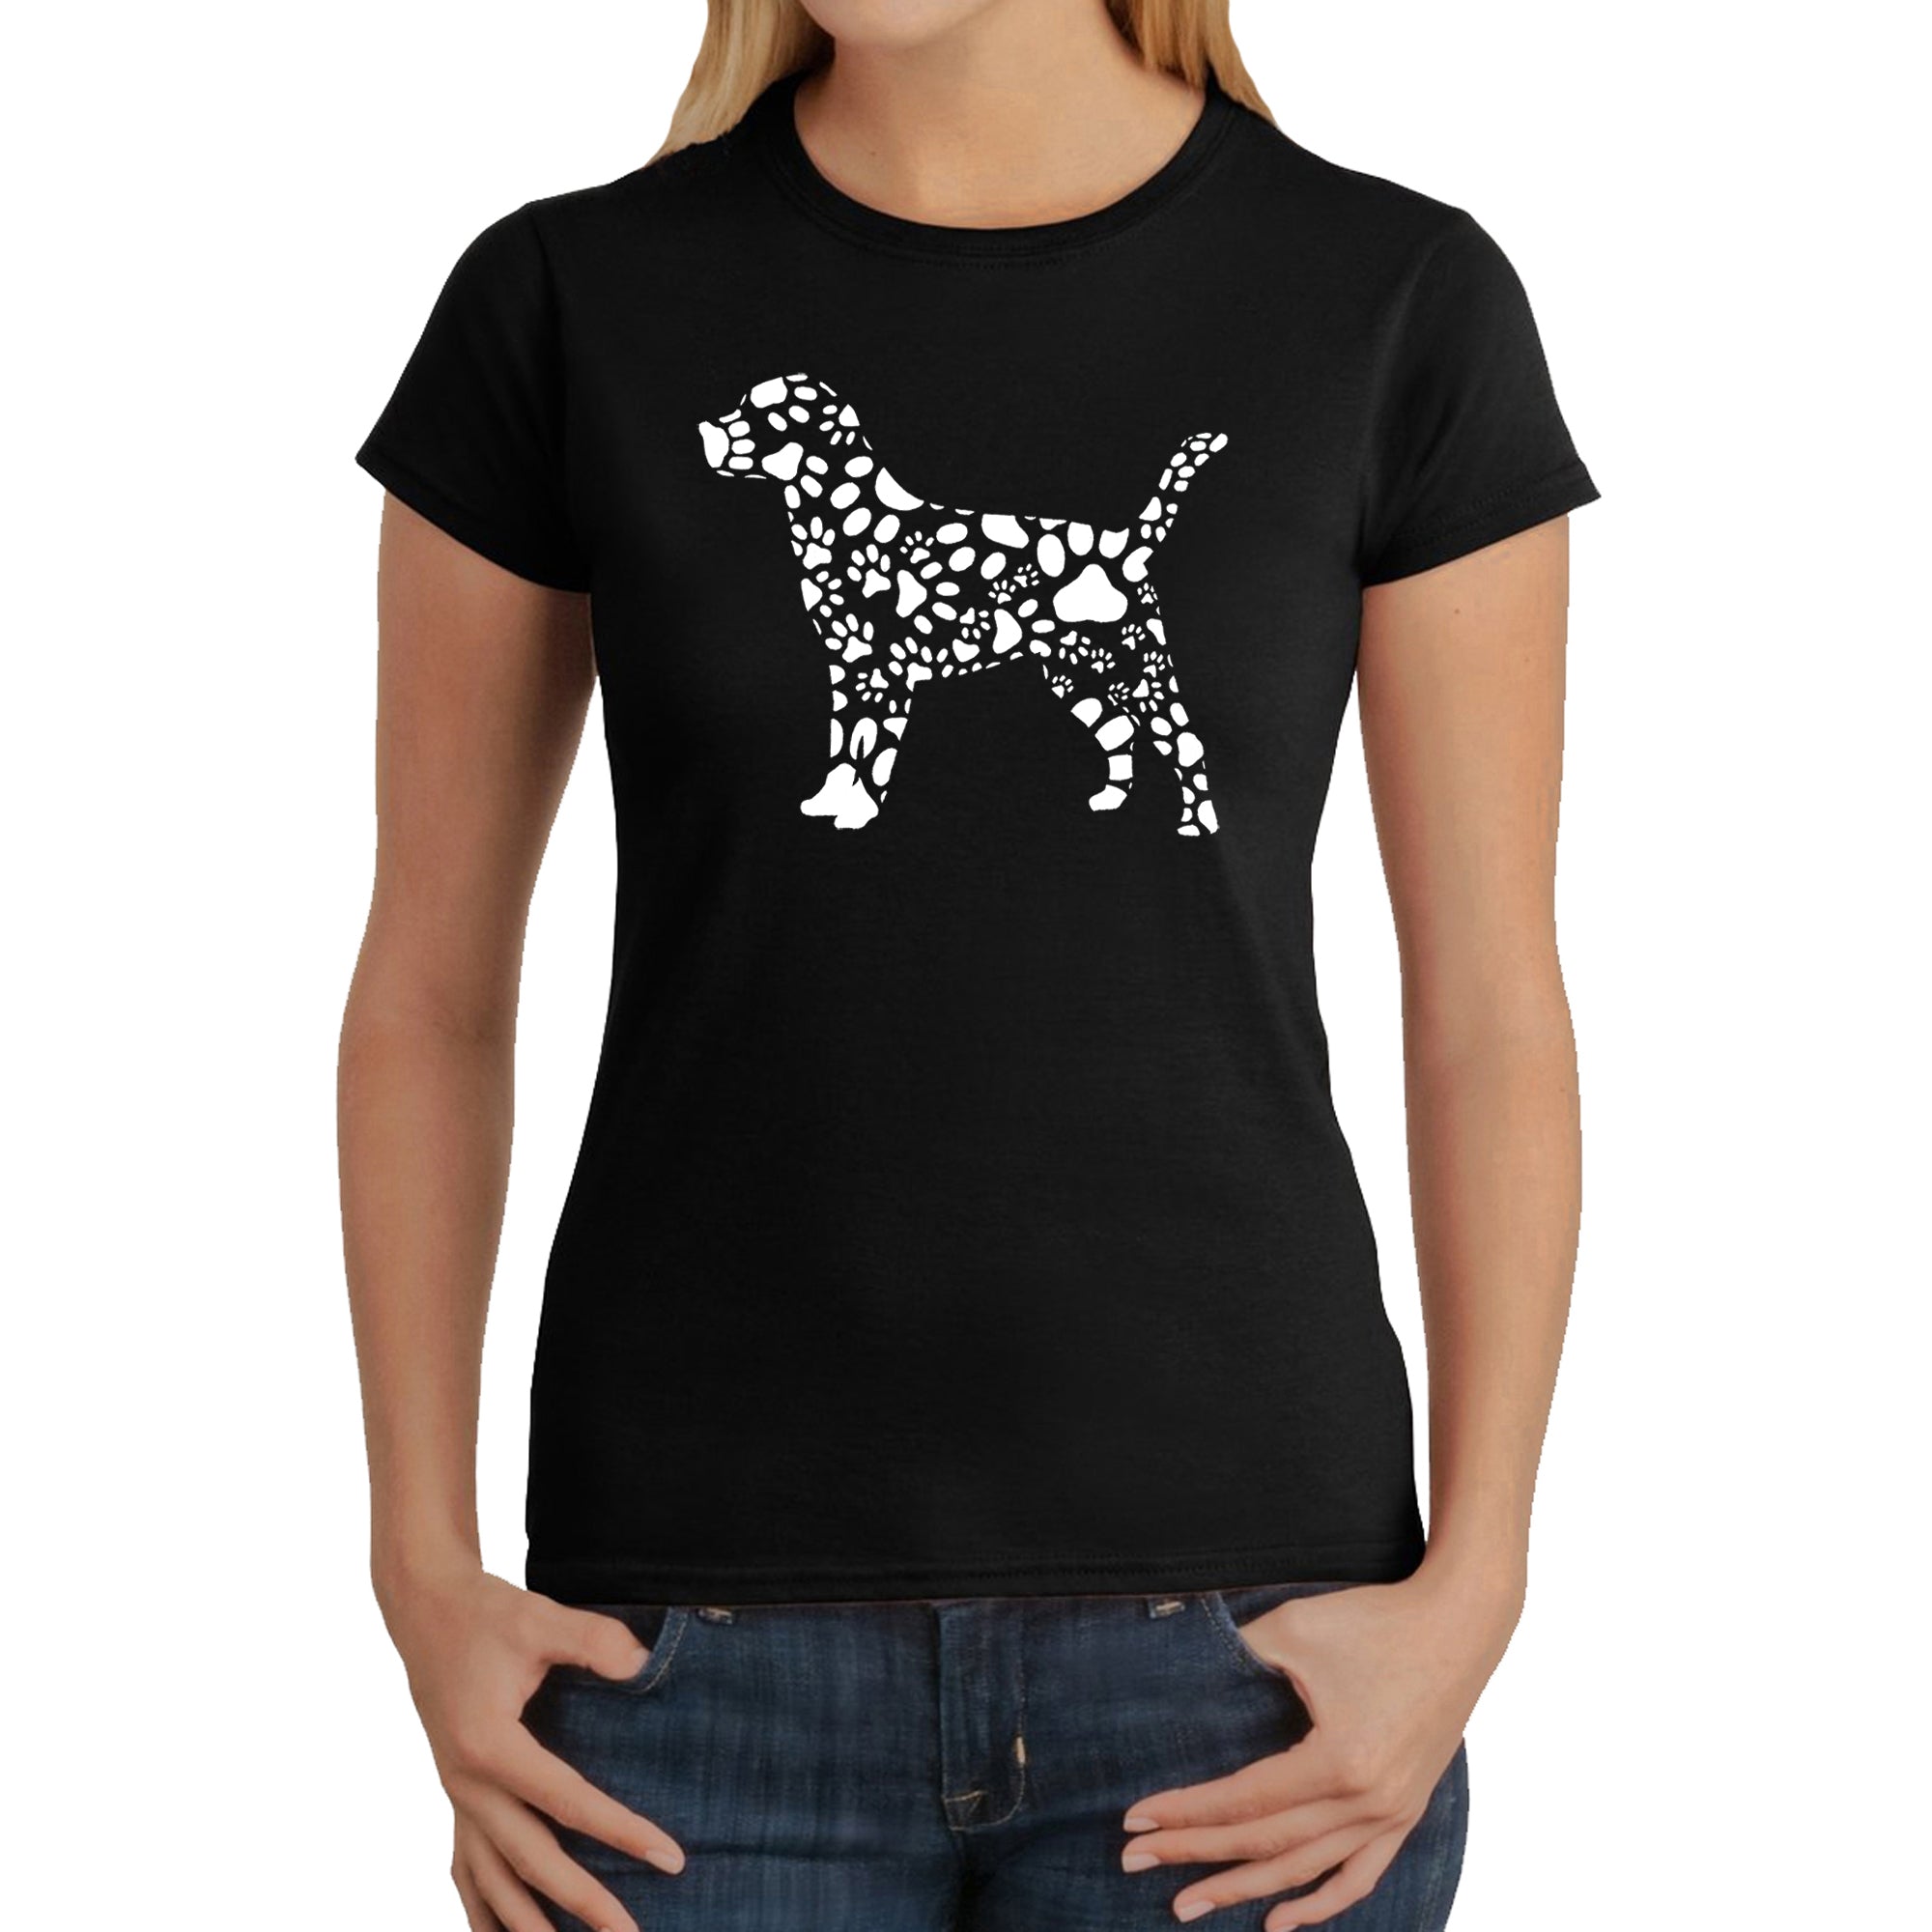 Dog Paw Prints - Women's Word Art T-Shirt - Kelly - XS